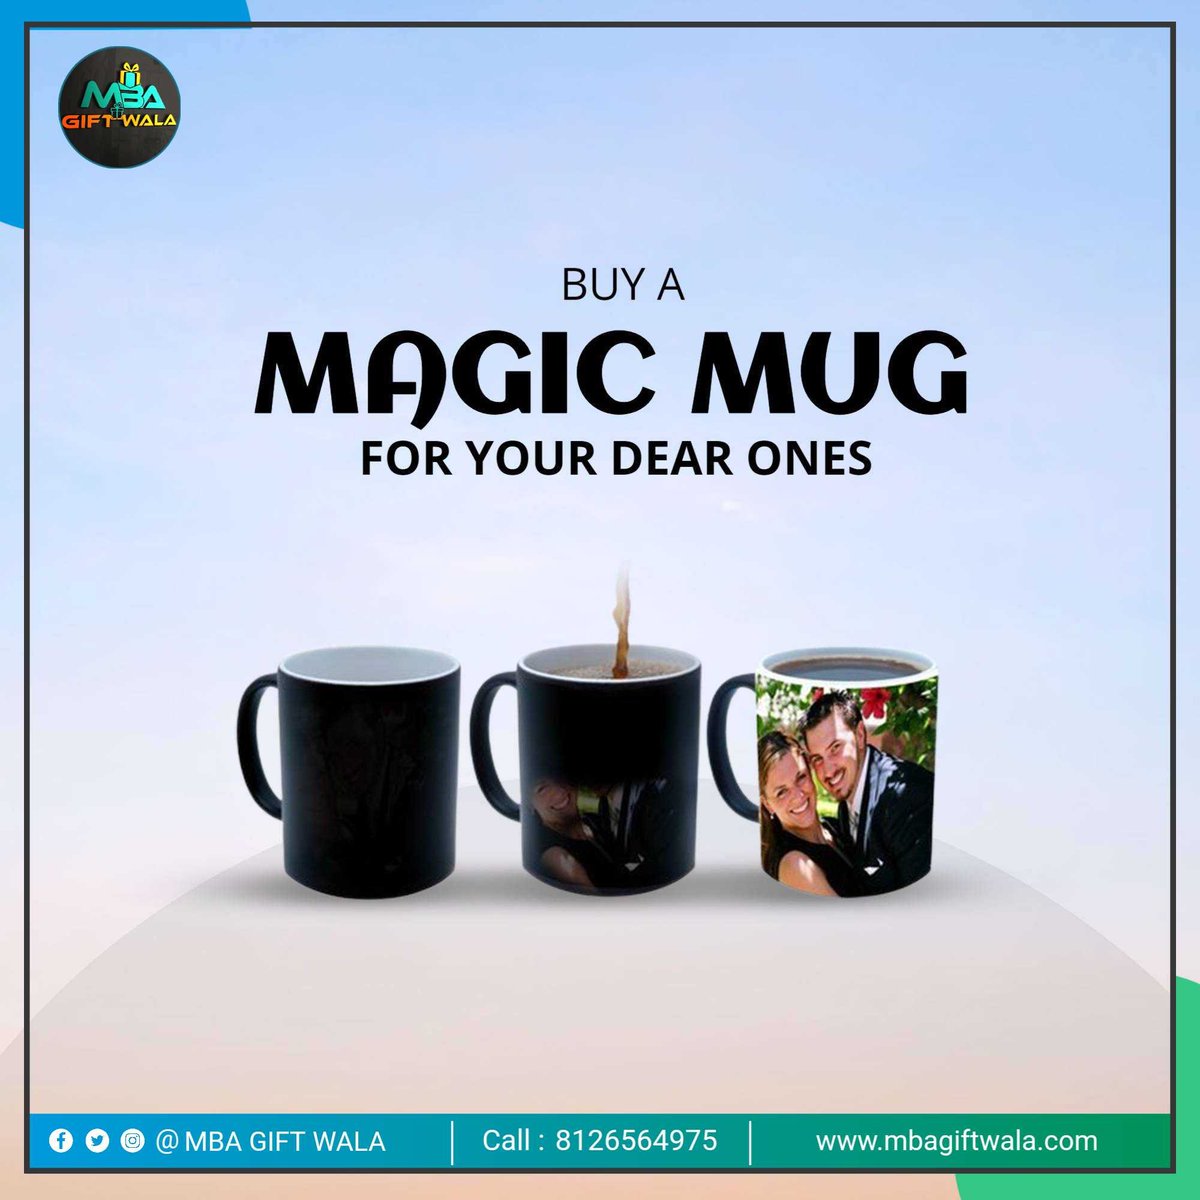 Customized Magic Mug | Black Magic Mug | MBA GIFT WALA | Personalized Coffee Mug | Trending Gift | Custom Mug | Magic Mug Gift | Unique Gift 

#magicmug #gift #customgift #customizedgift #personalizedgift #mbagifts #mbagiftwala #magicmuggift #coffeemuggift #giftsforher